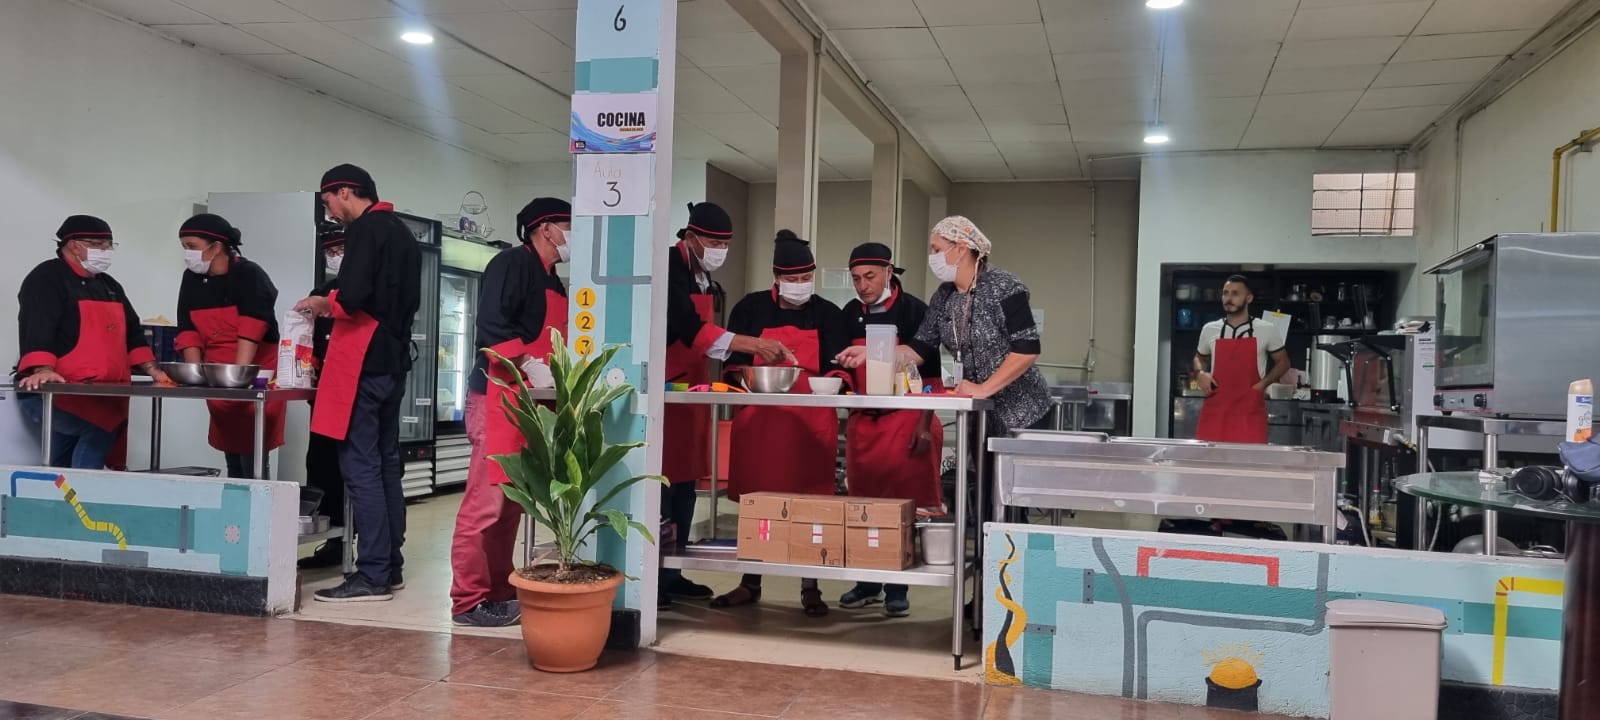 Campaña “Sumando la diferencia” busca equipar Escuela de Cocina de Chepe se Baña en Costa Rica